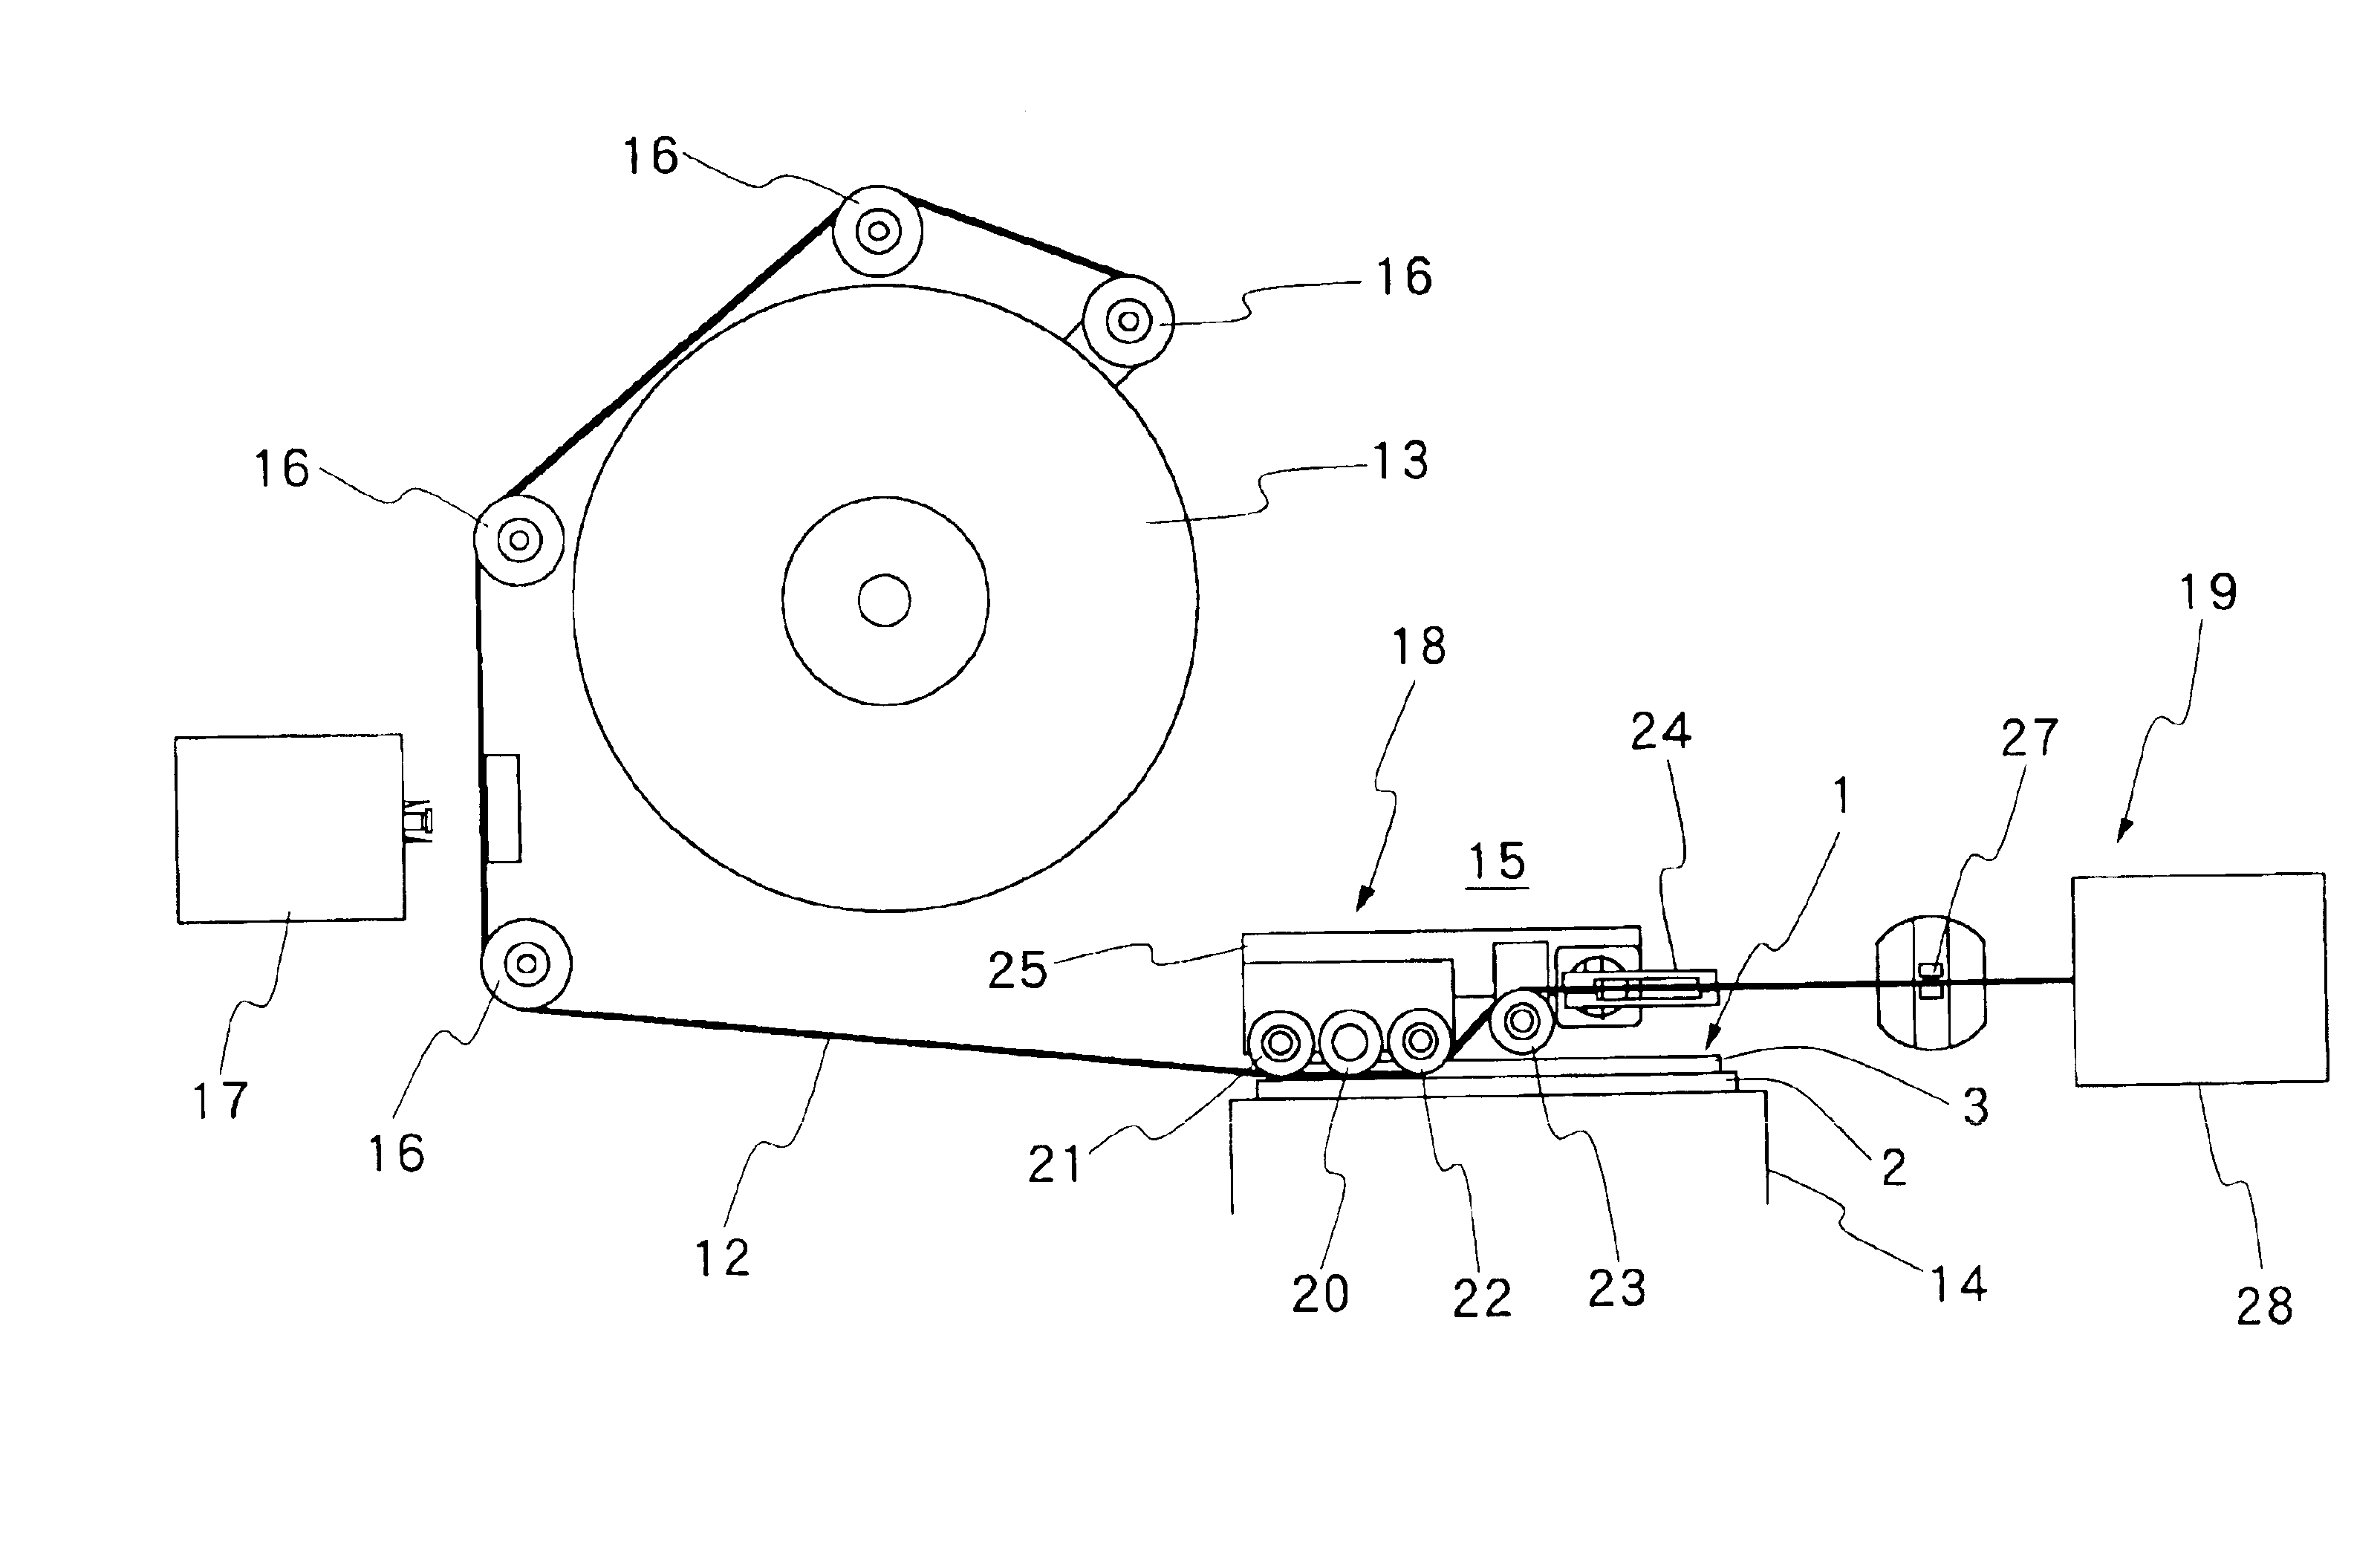 ACF tape feeder machine, and method for feeding ACF tape